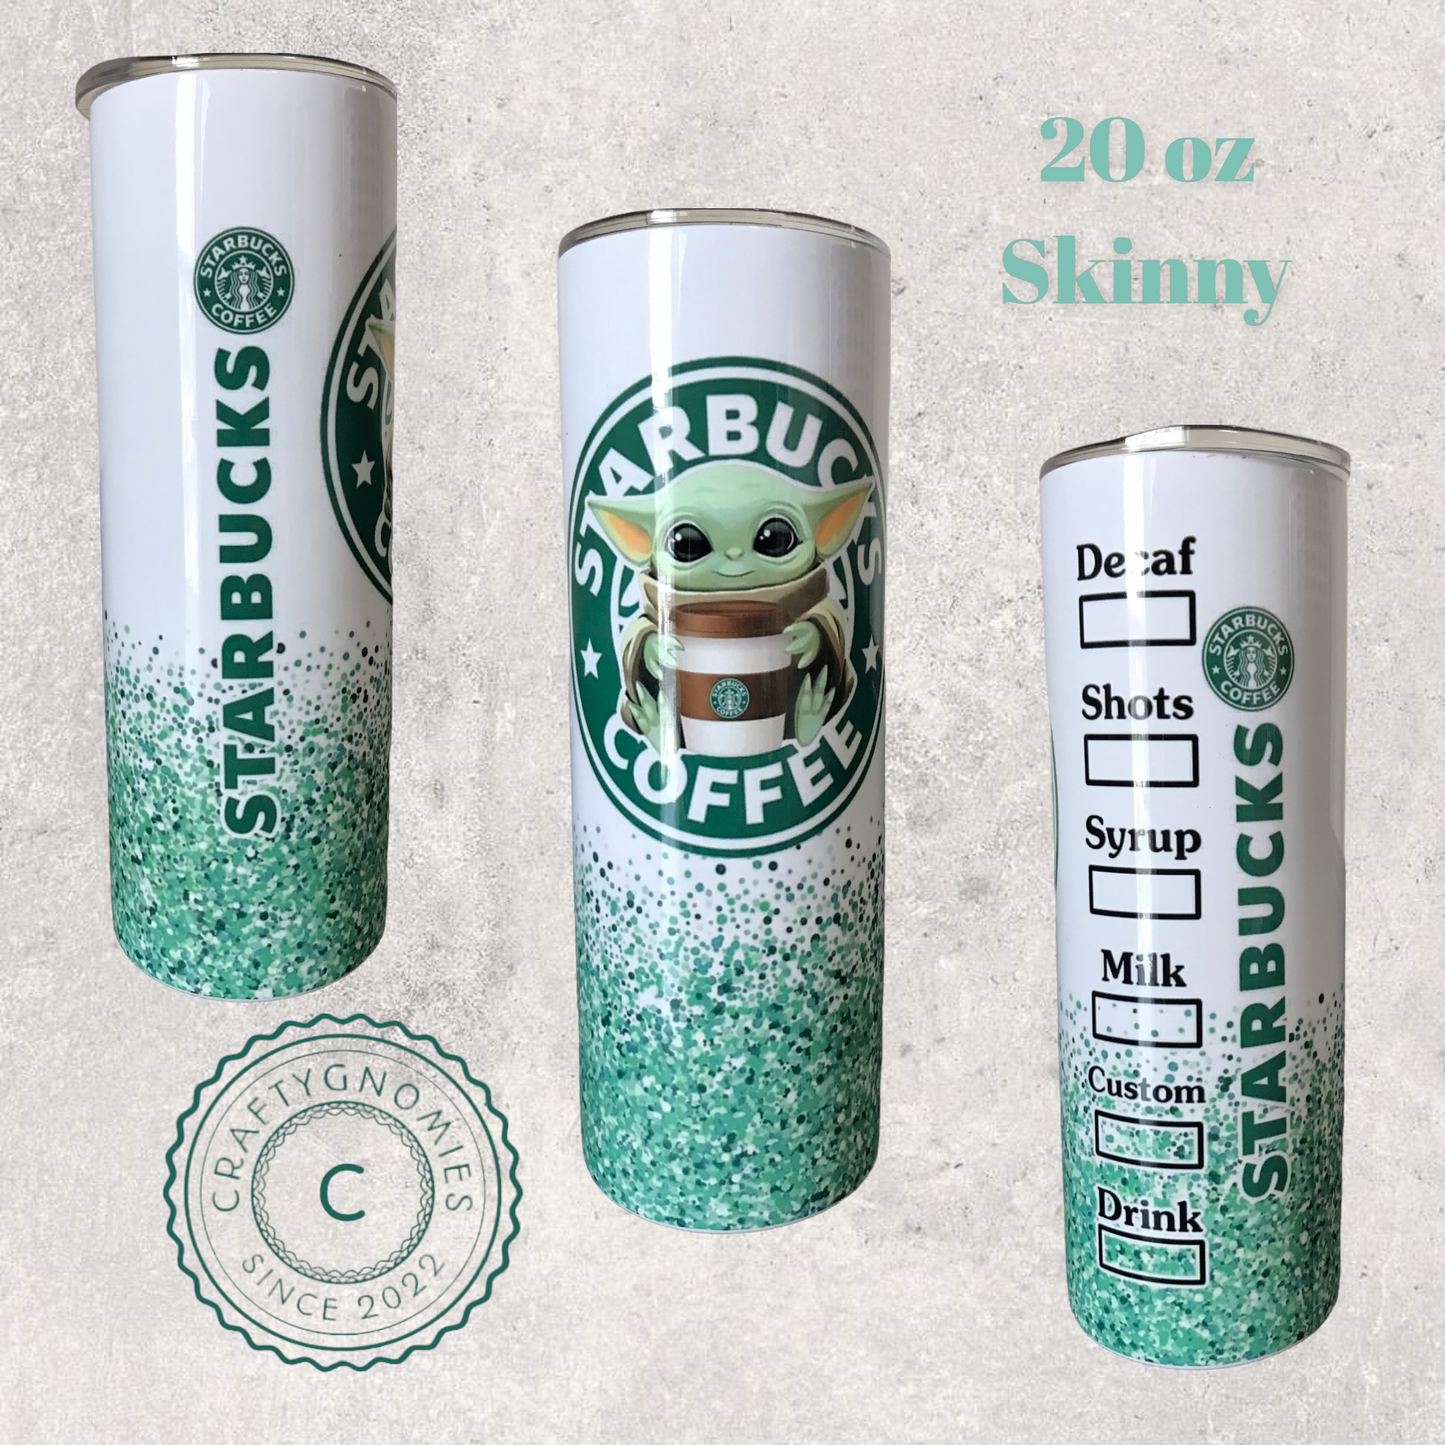 Starbucks Coffee 20 oz Skinny Custom Tumbler - Add a Name for FREE